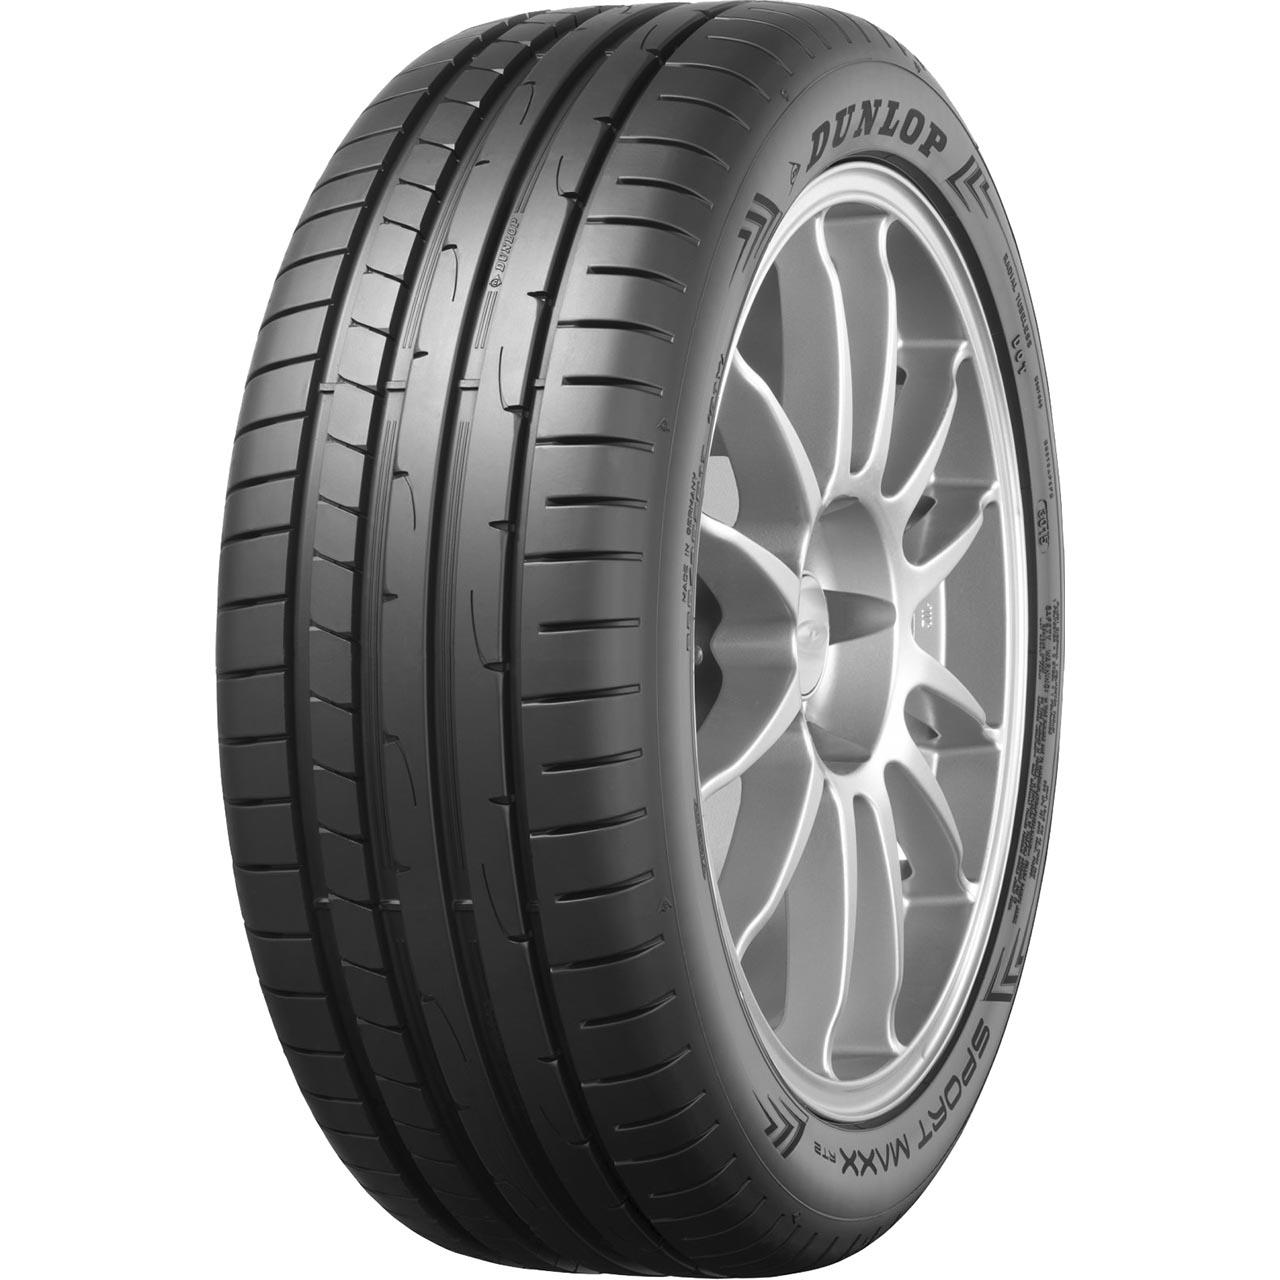 Gomme Nuove Dunlop 205/40 R18 86Y SP.MAXX RT2 MFS XL pneumatici nuovi Estivo